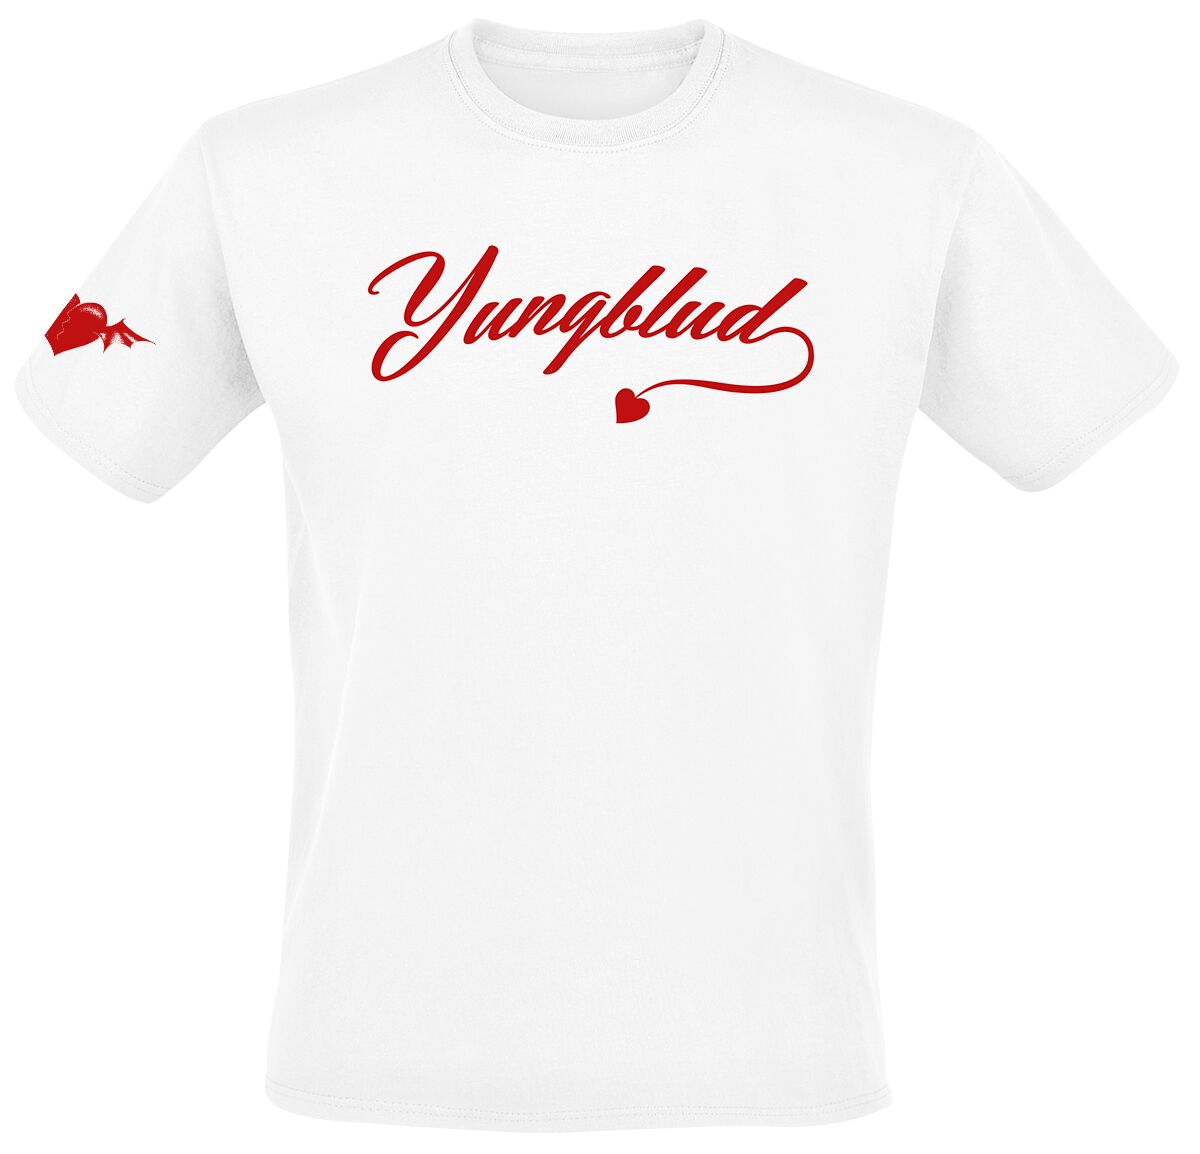 Yungblud 666 T-Shirt white